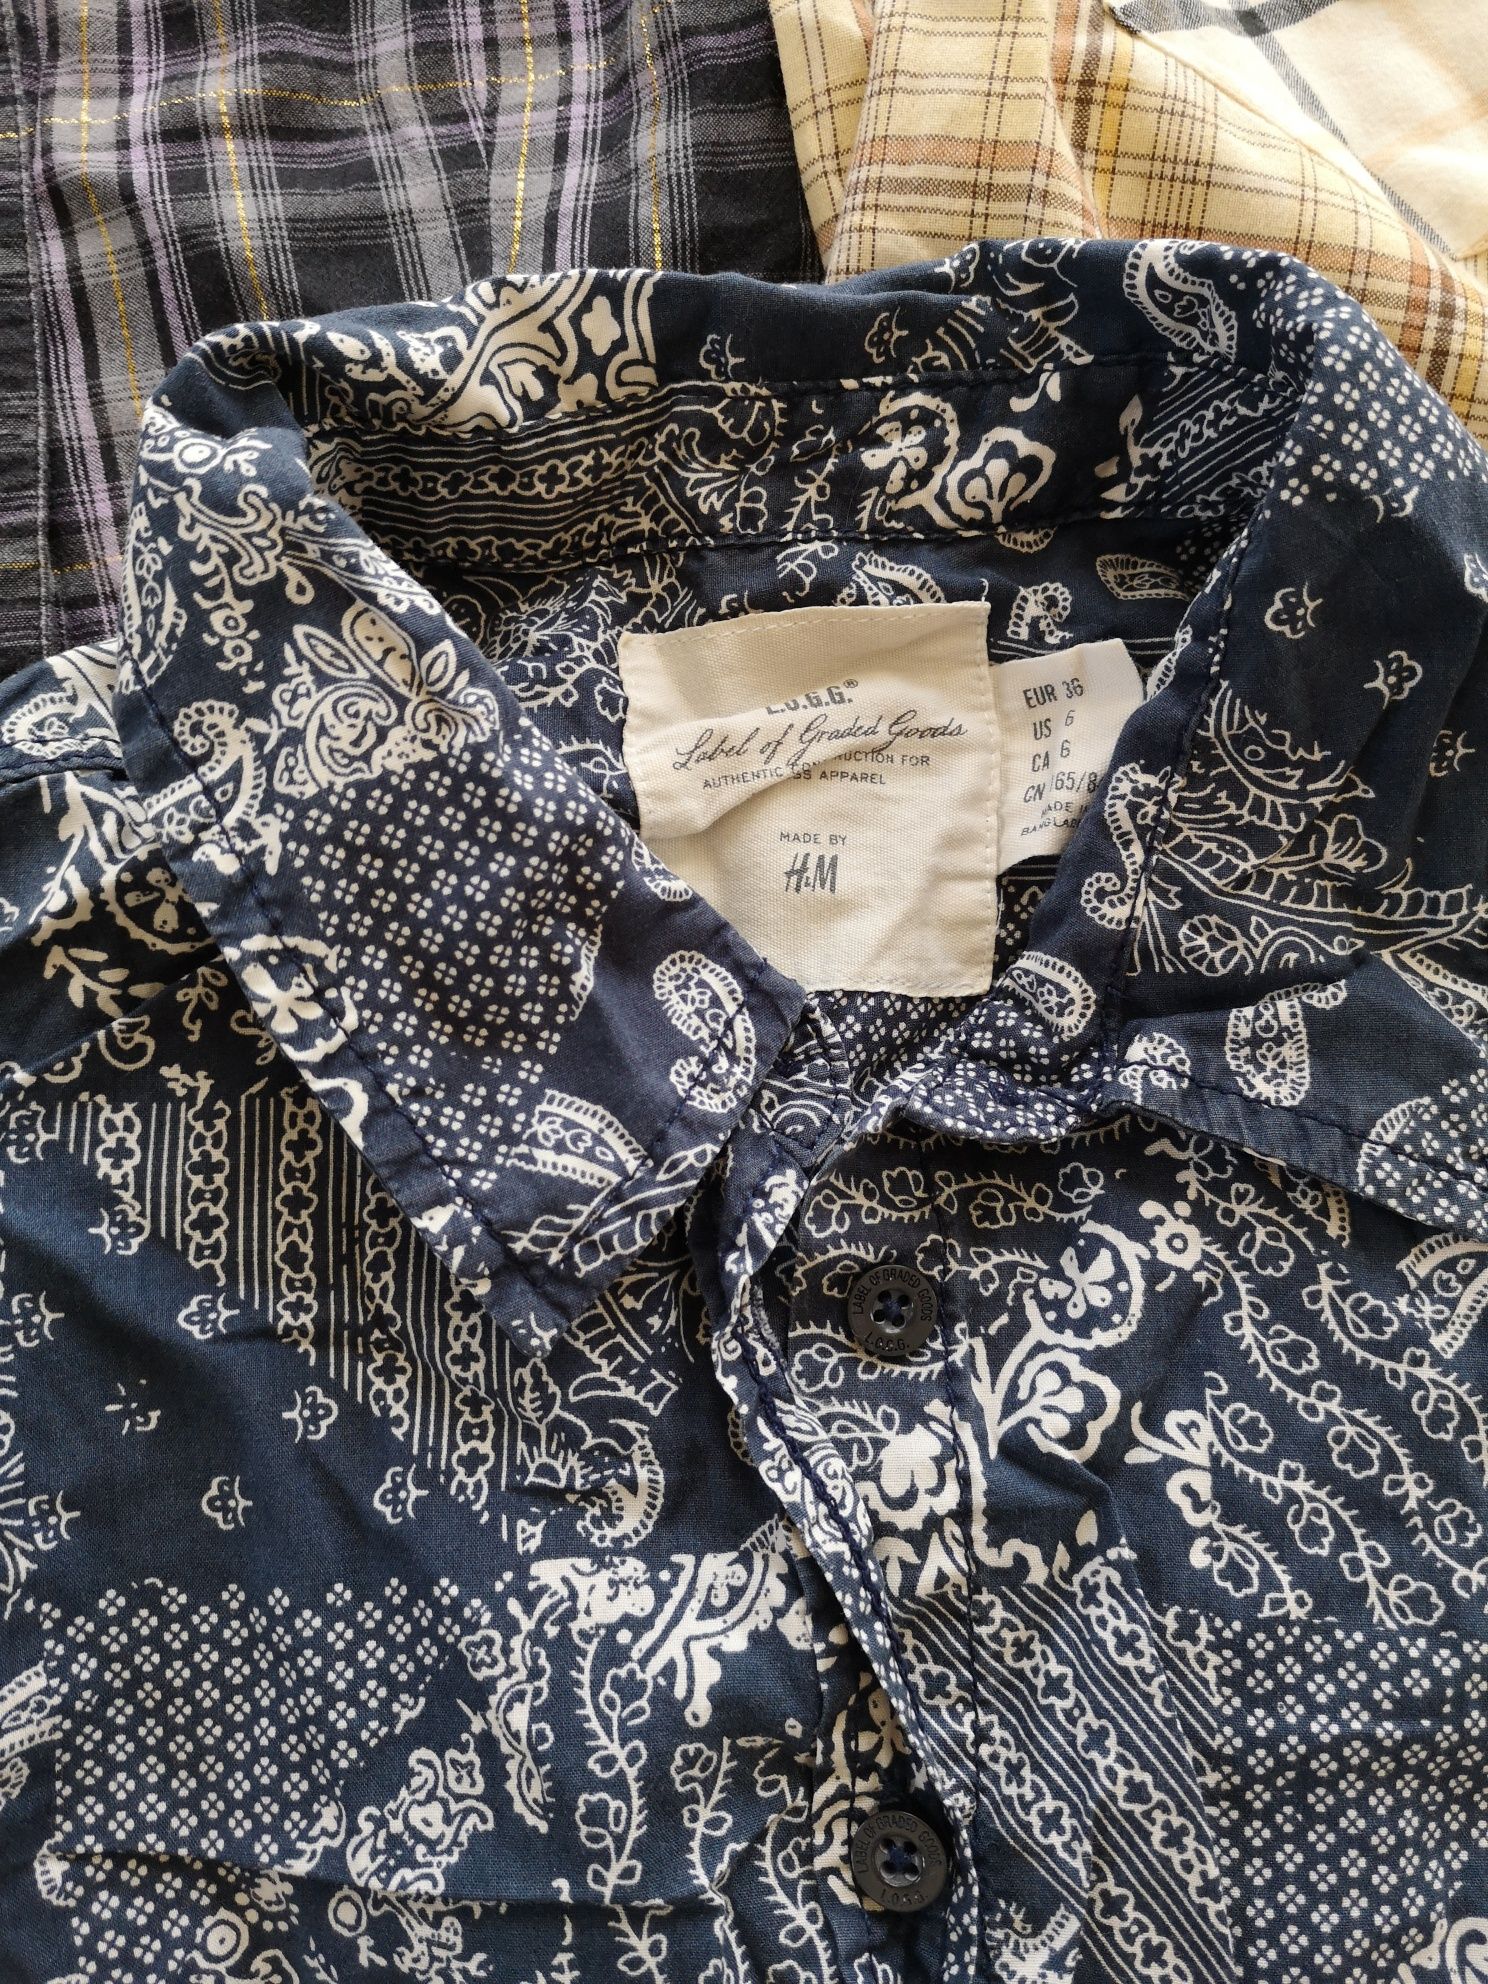 Koszulki /koszule bluzka damska krótki rękaw /H&M, Orsay /S